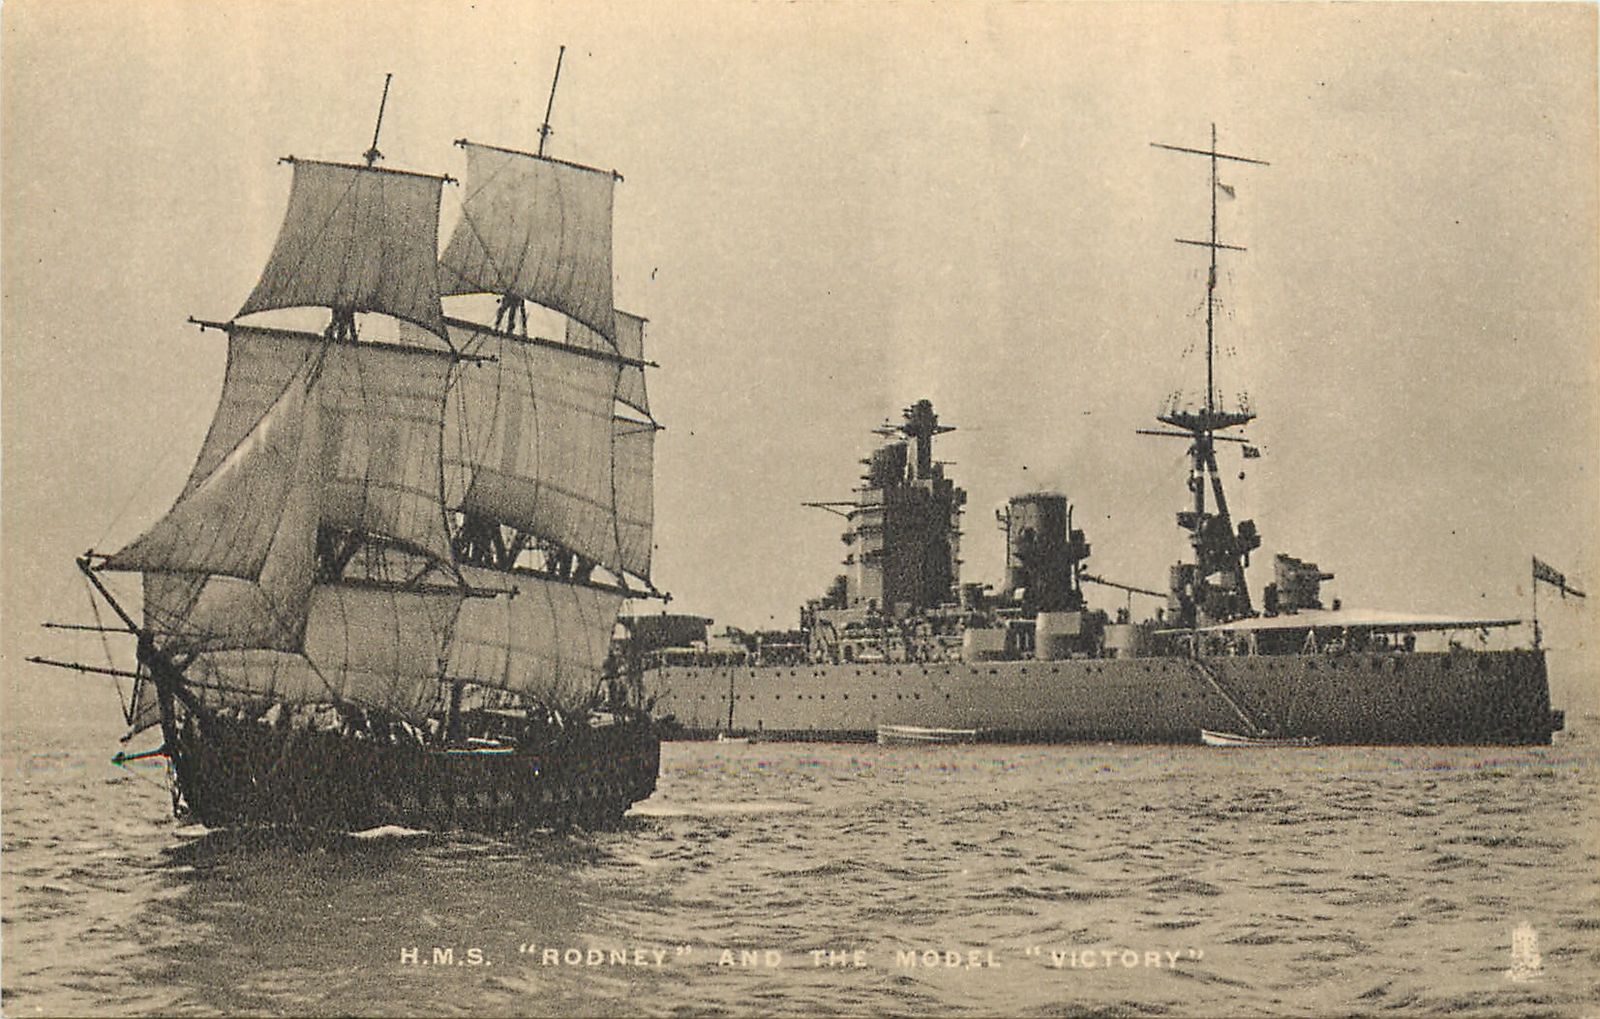 HMS Rodney and a replica of HMS Victory